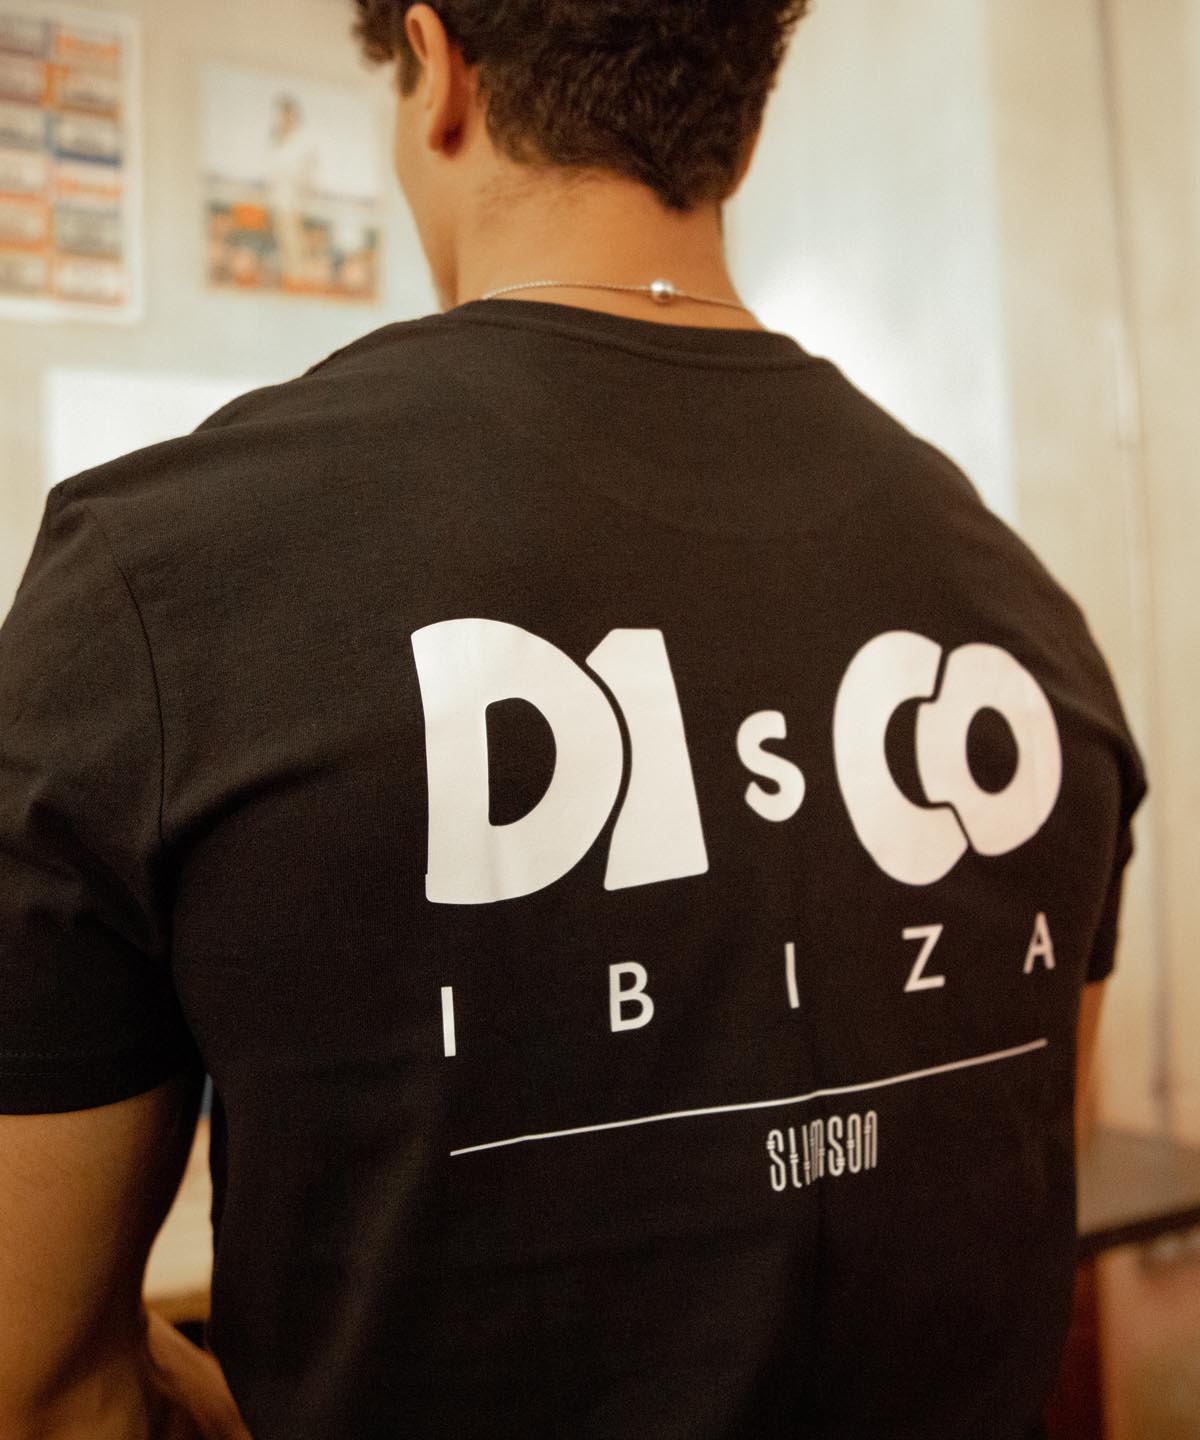 DISCO Ibiza